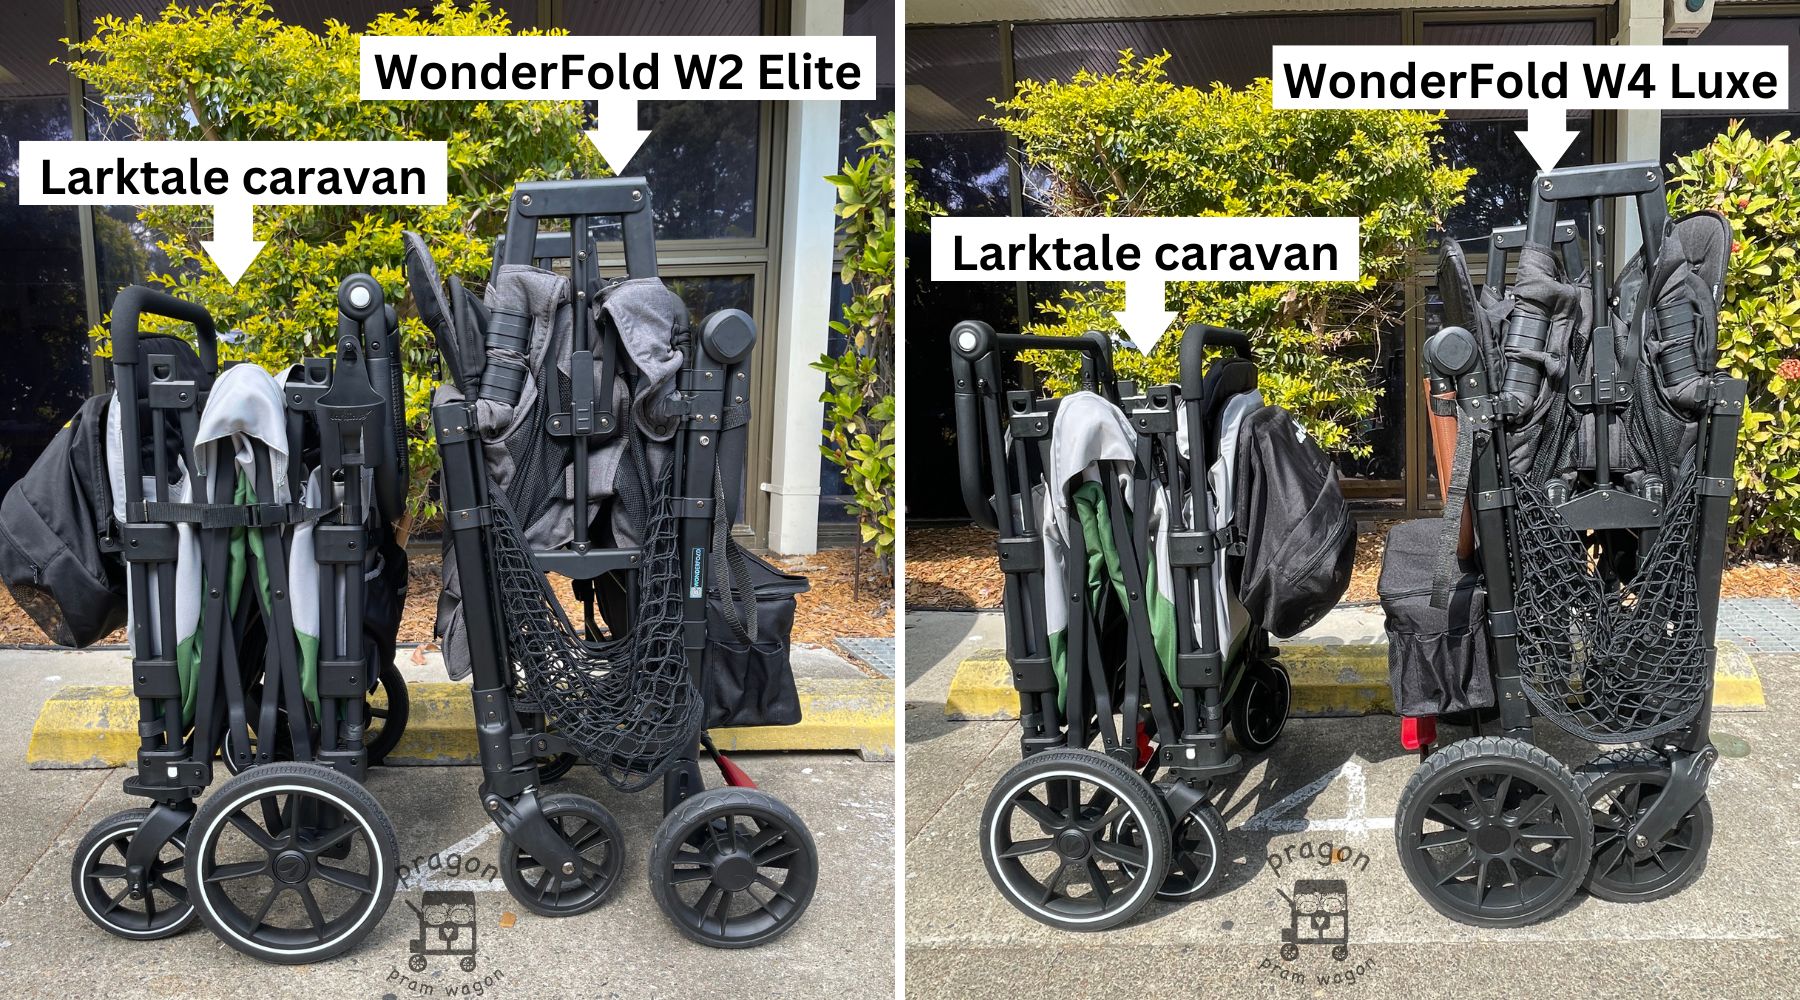 W2 Wonderfold Caravan larktale